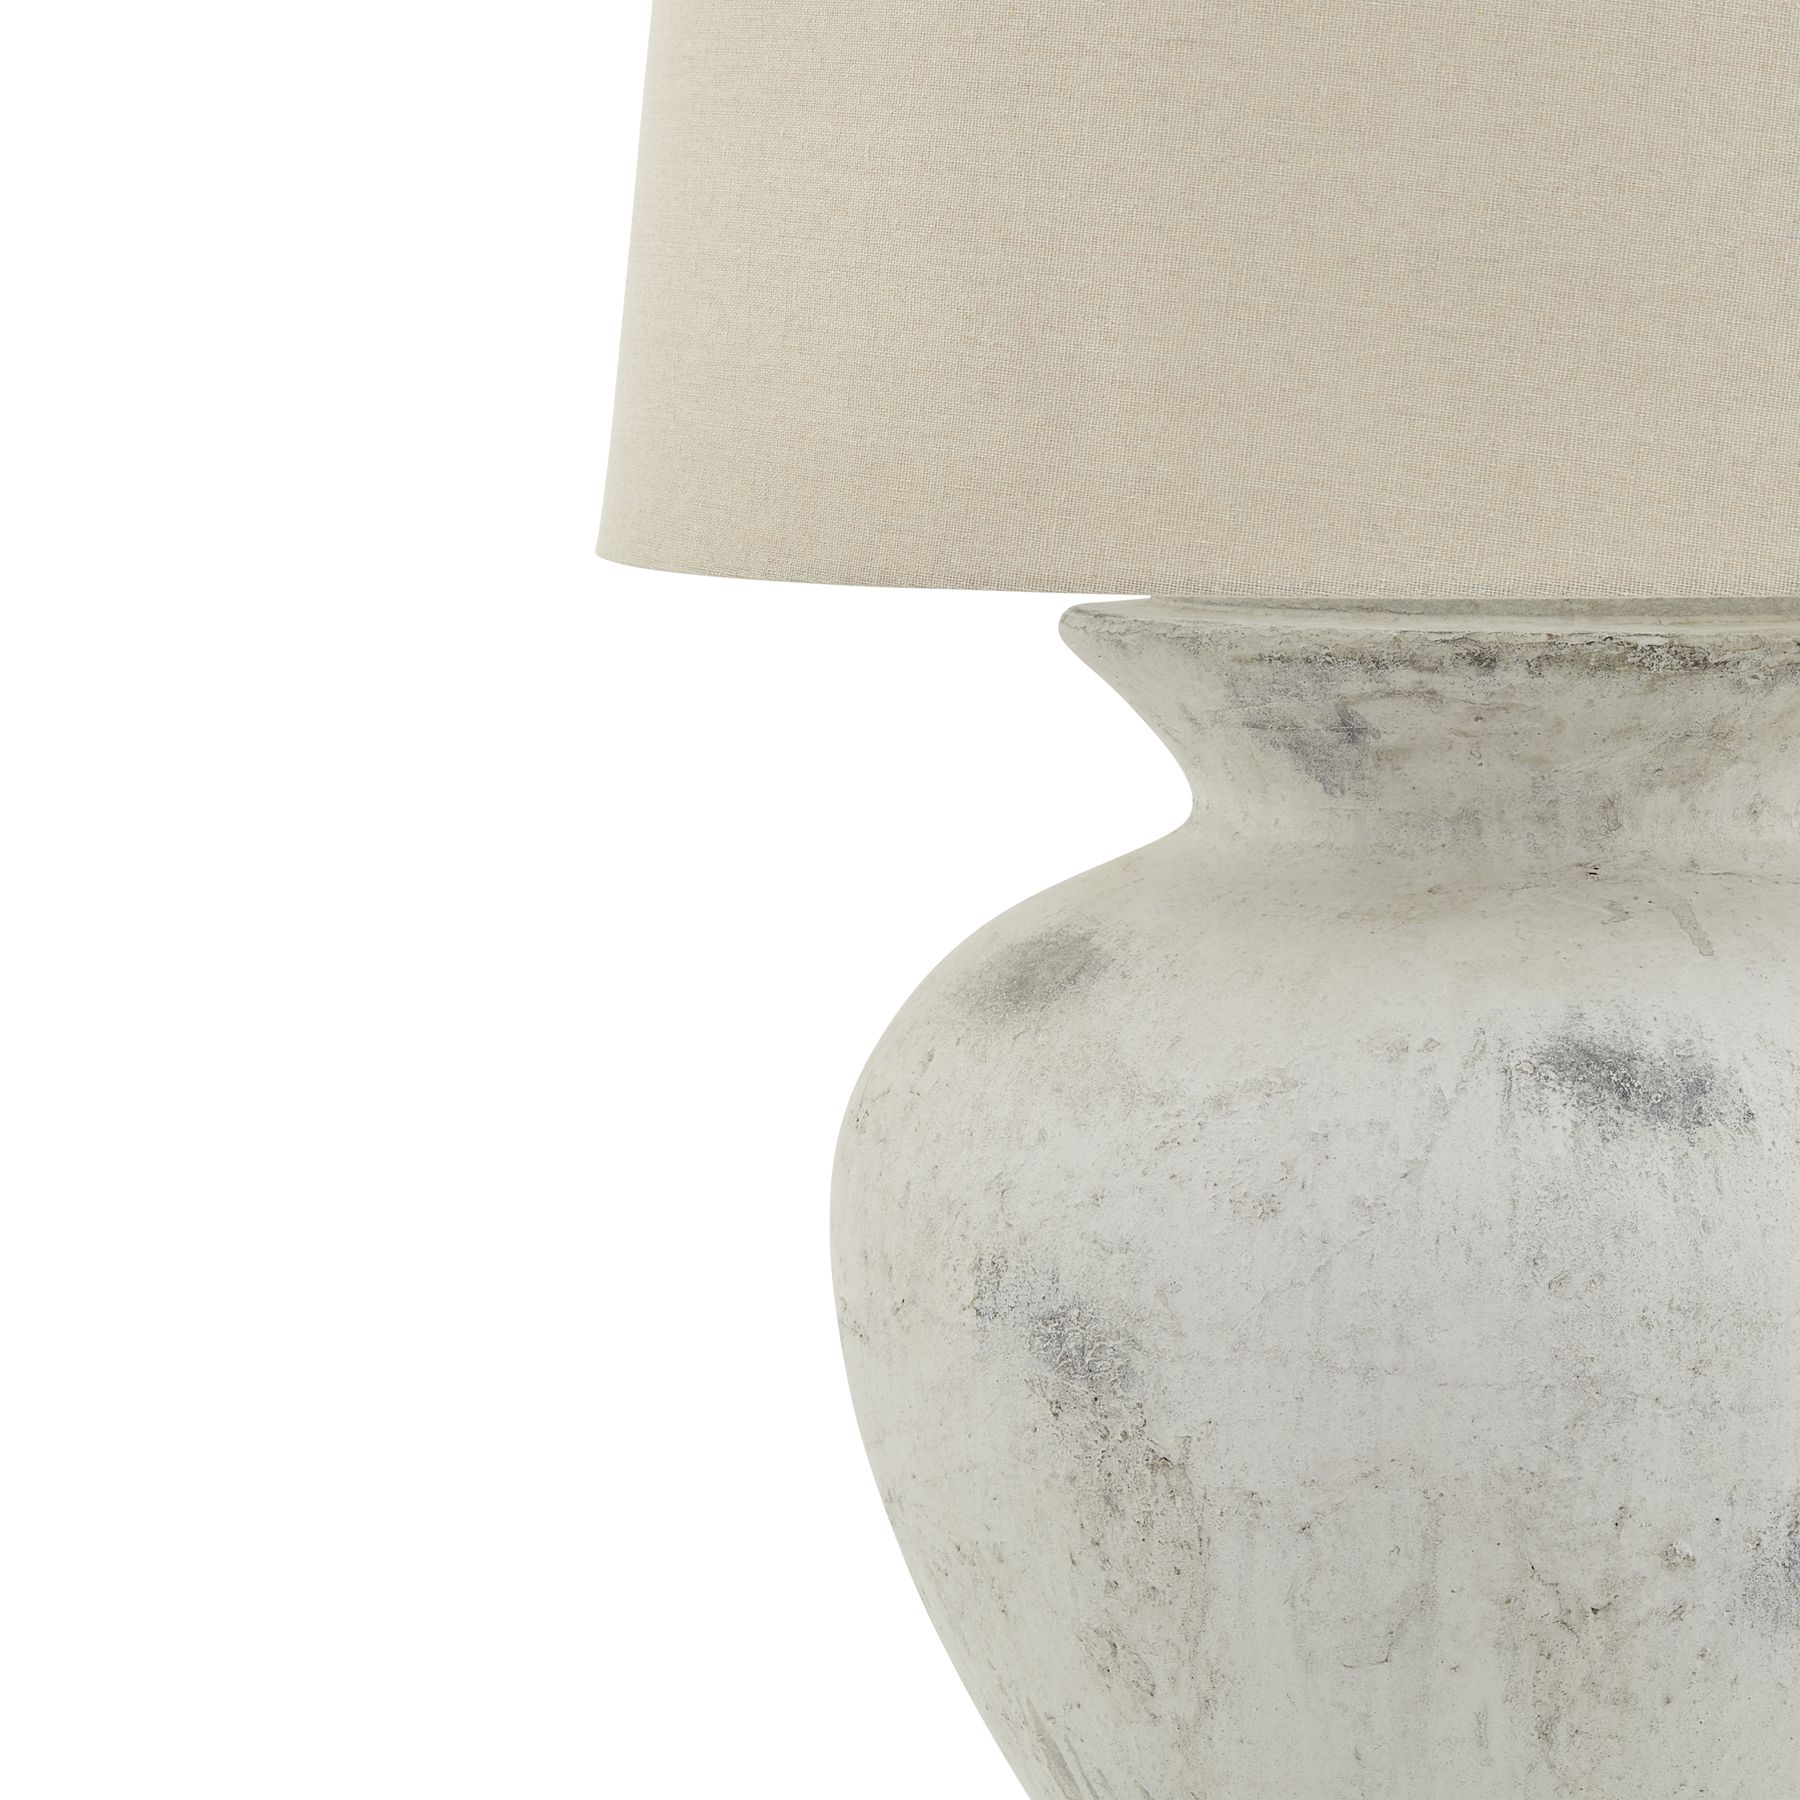 Downton Antique White Lamp - Image 2